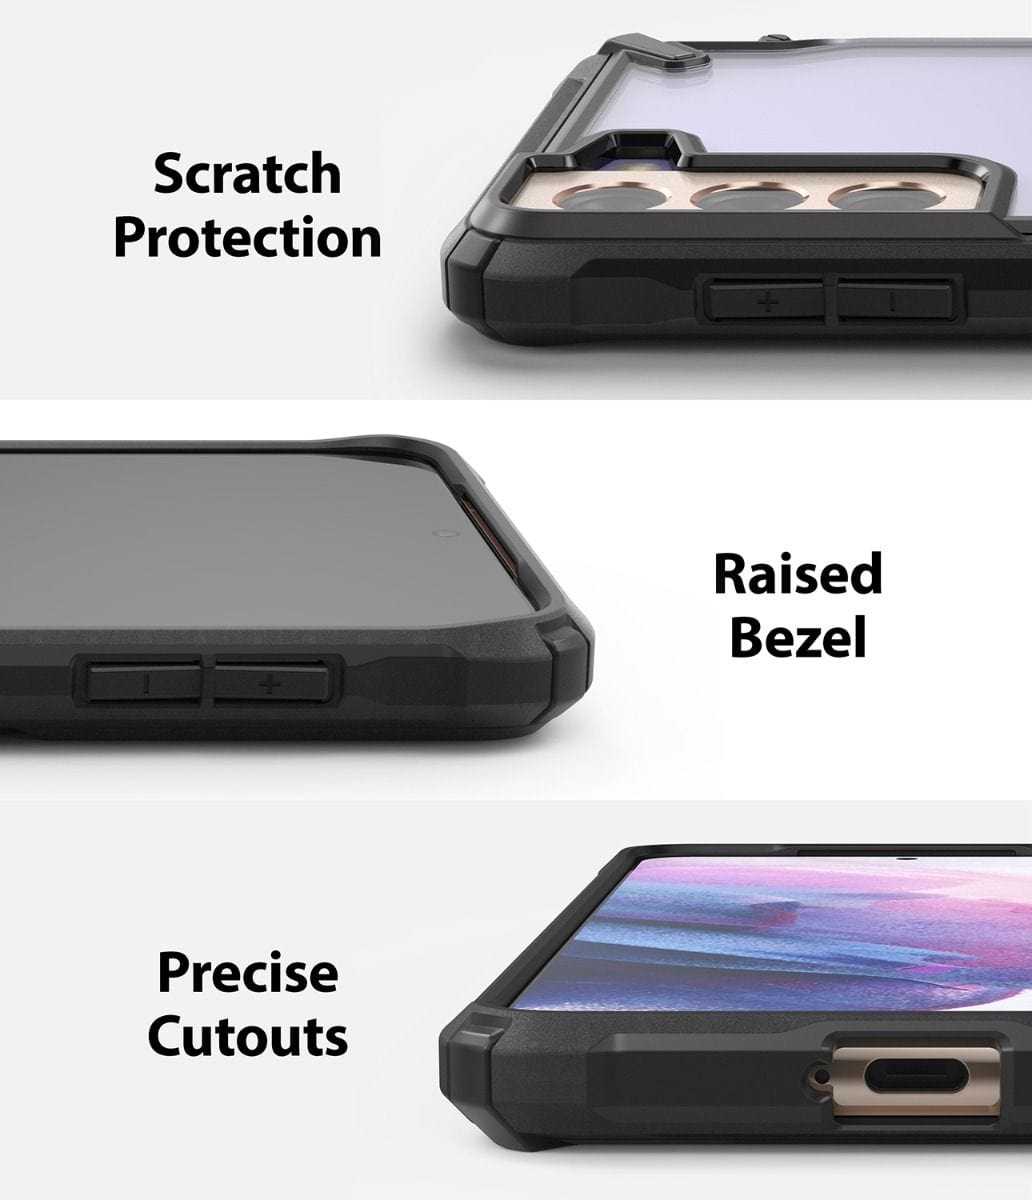 Samsung Galaxy S21 Case BLACK Ringke FUSION X